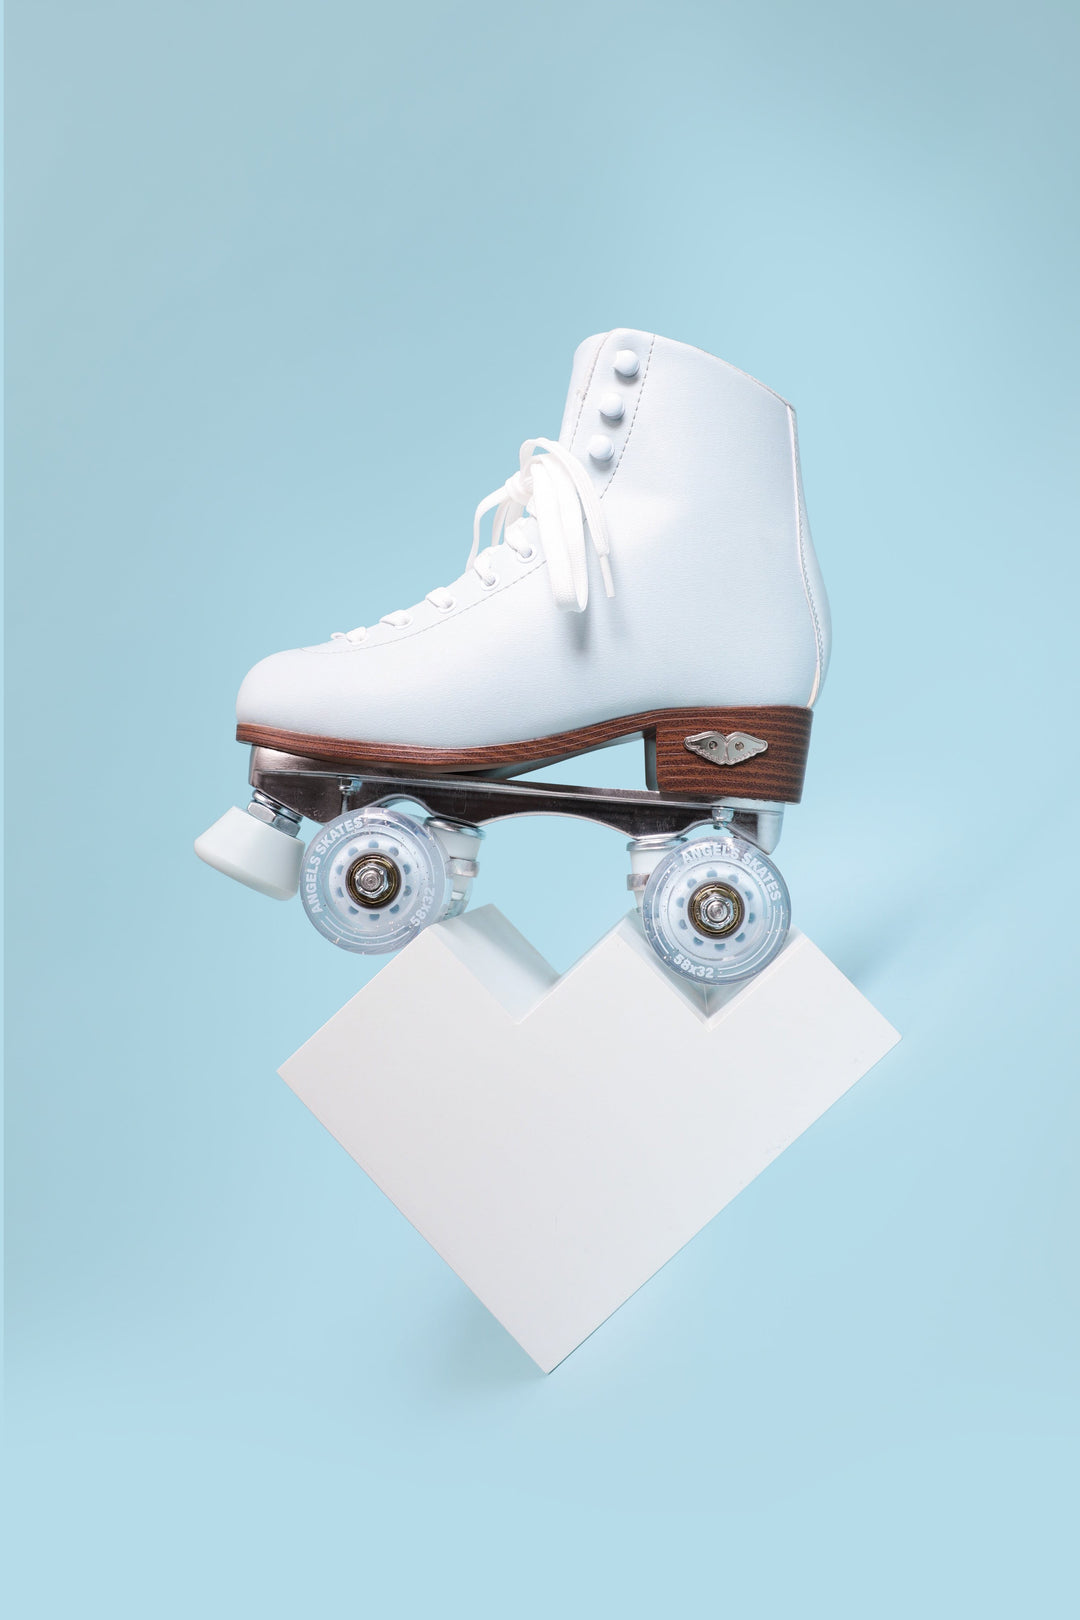 Icy Blue Roller Skates